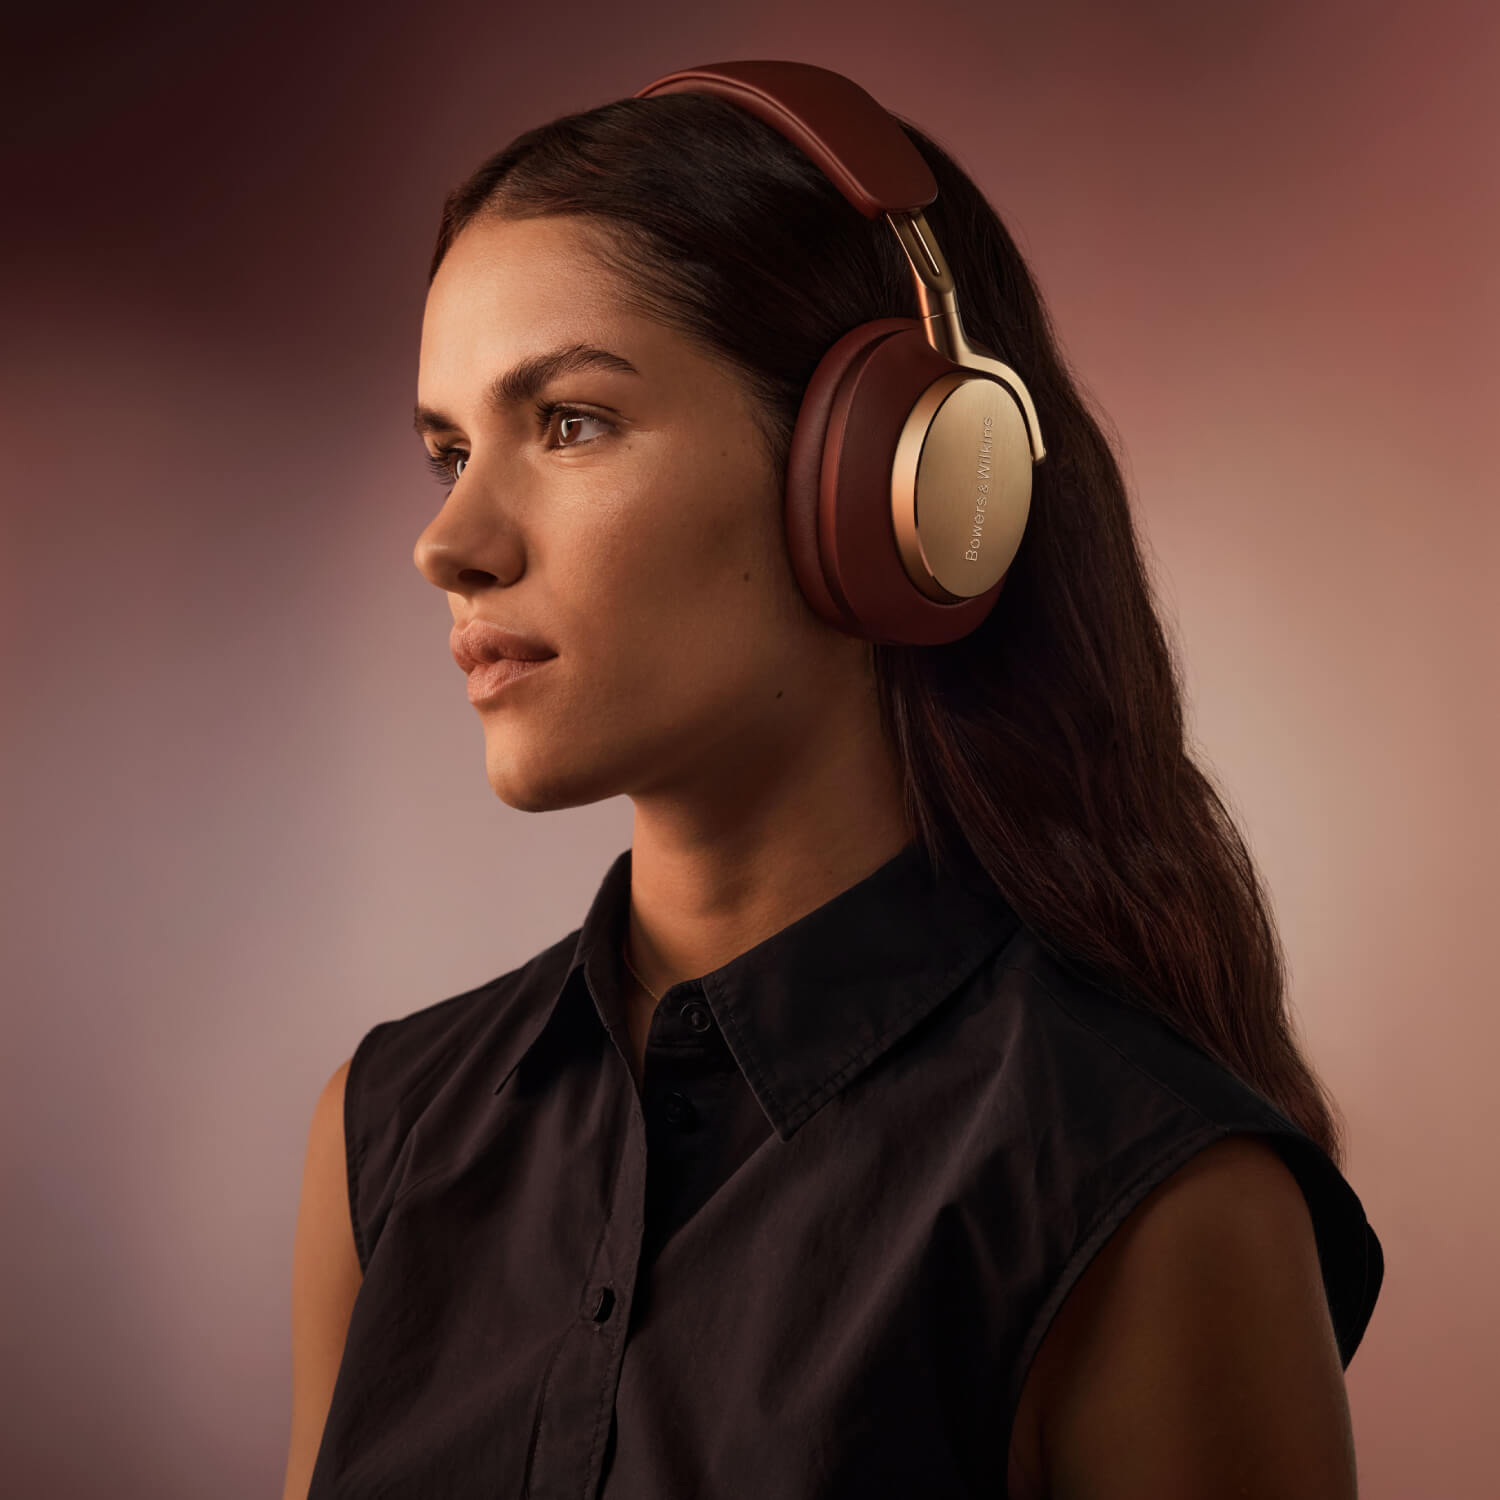 Px8 - Over-ear noise-canceling headphones